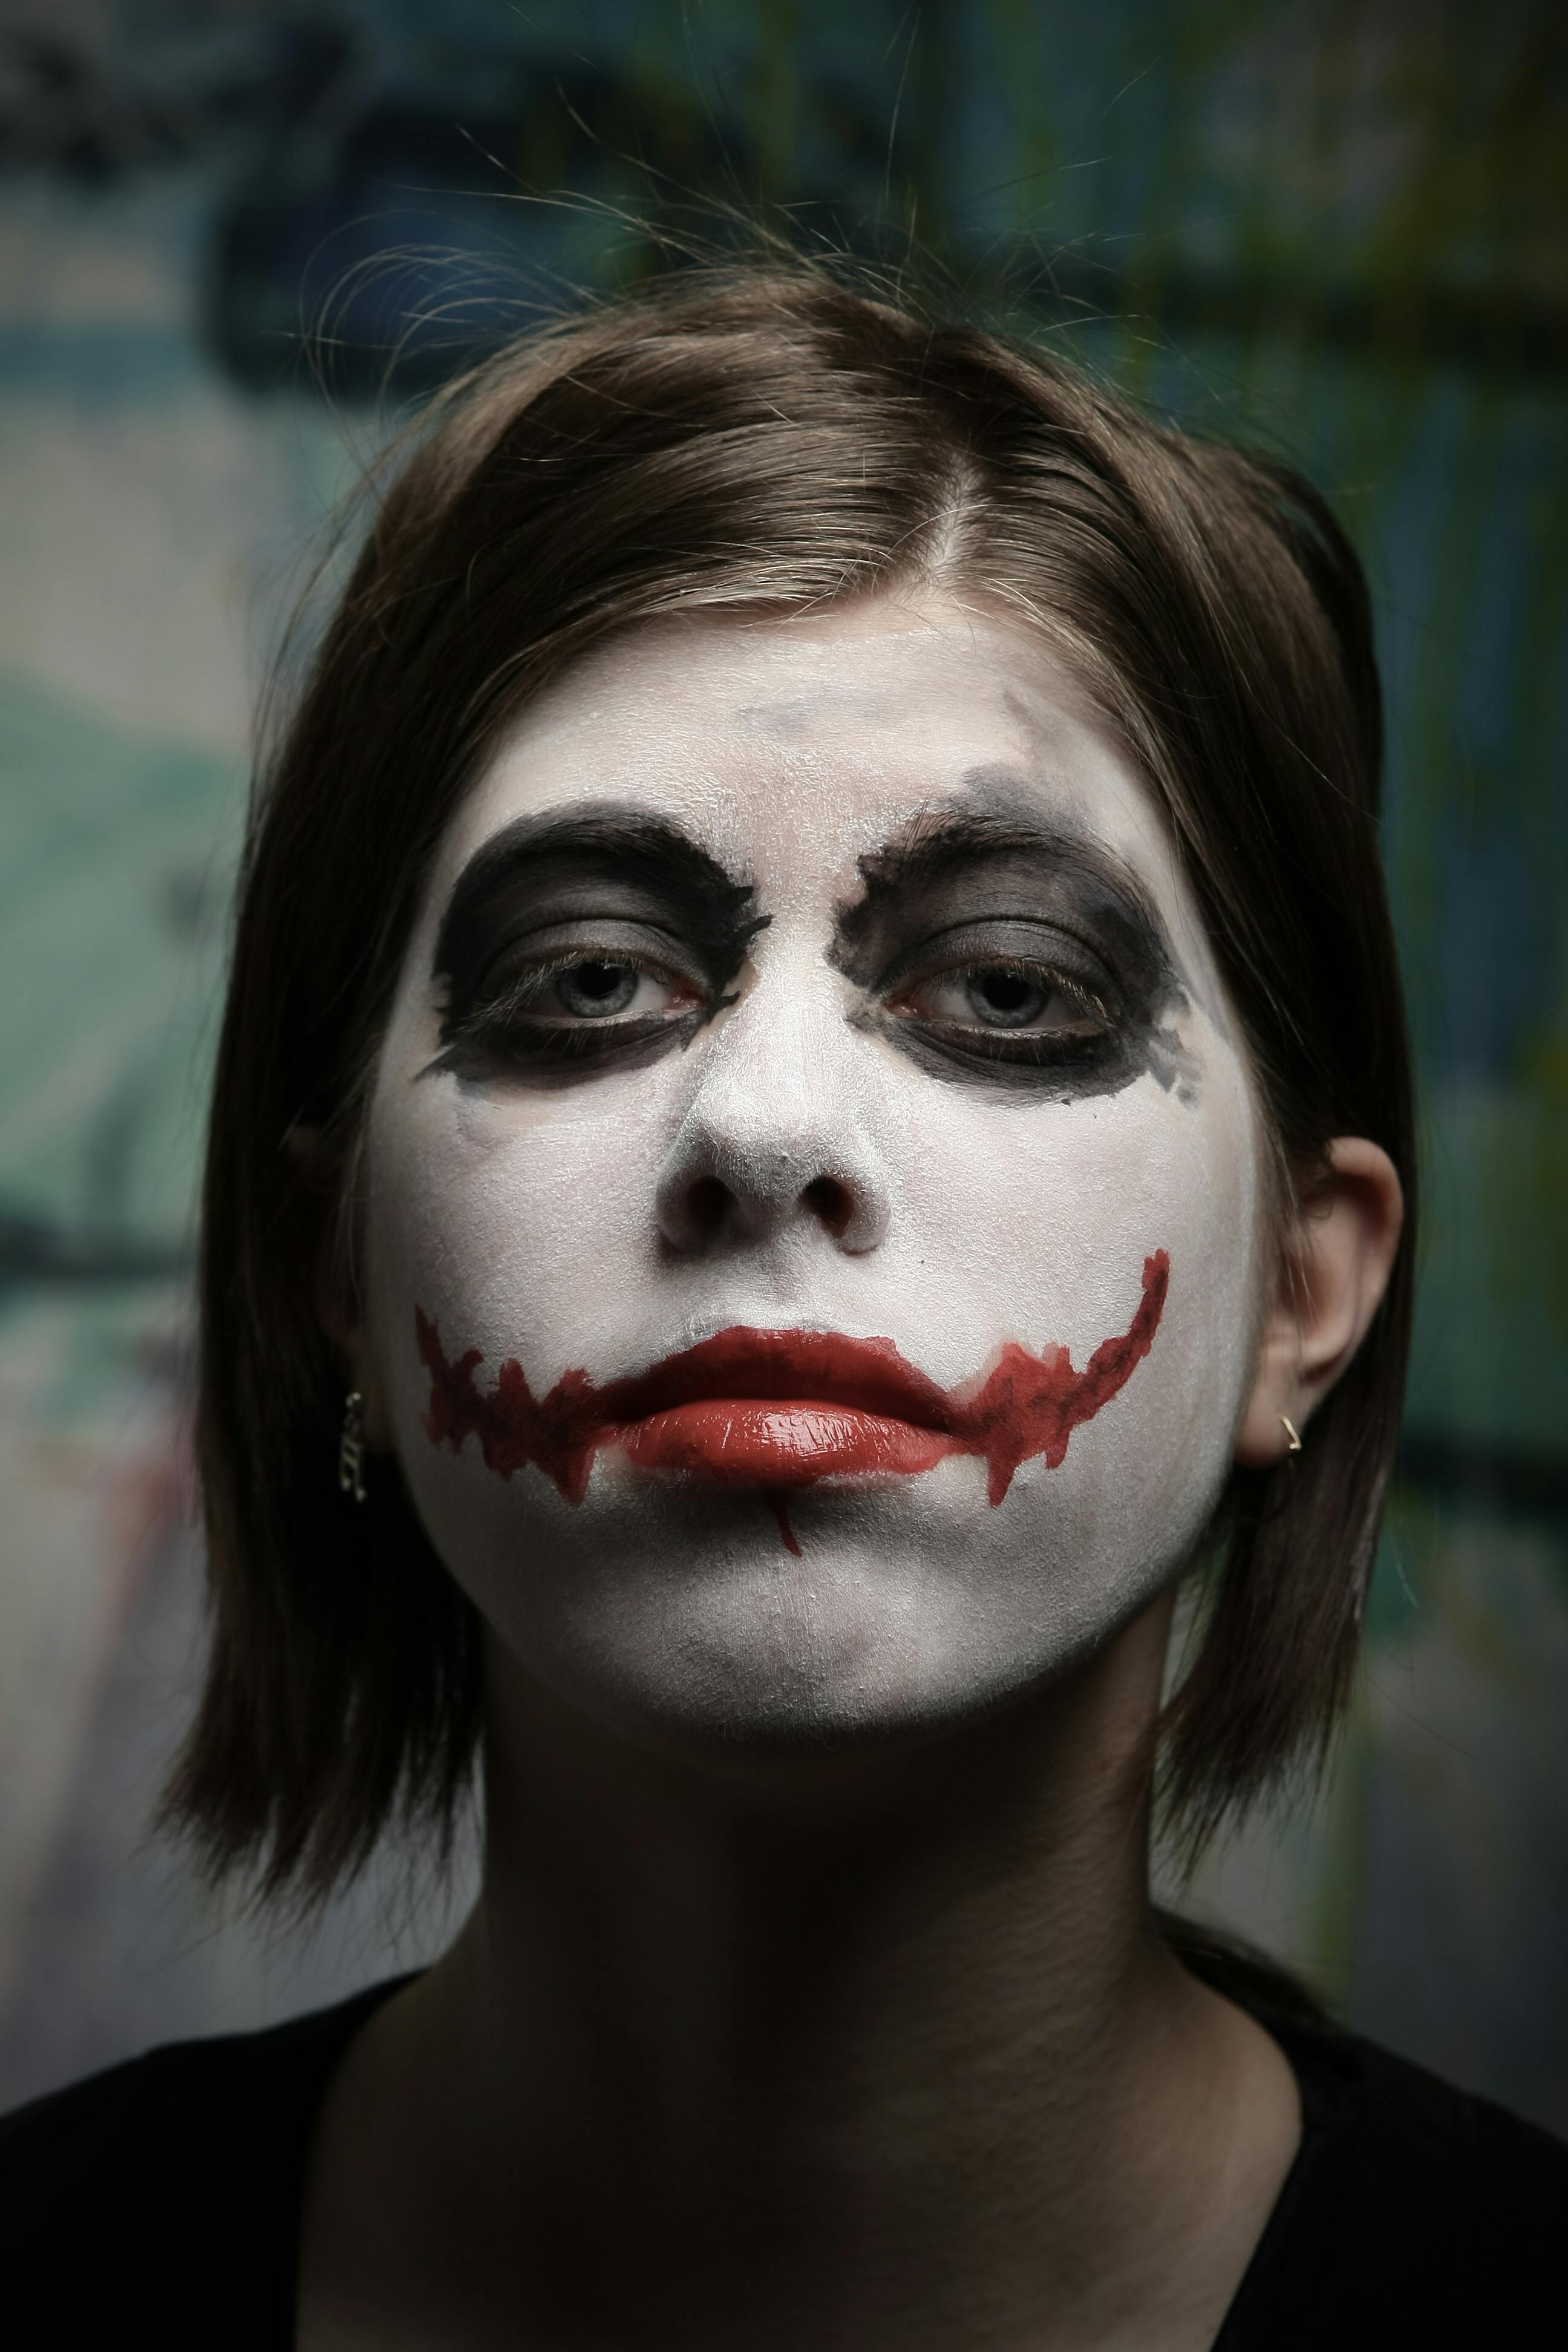 Woman With Joker Makeup Free Stock Photo